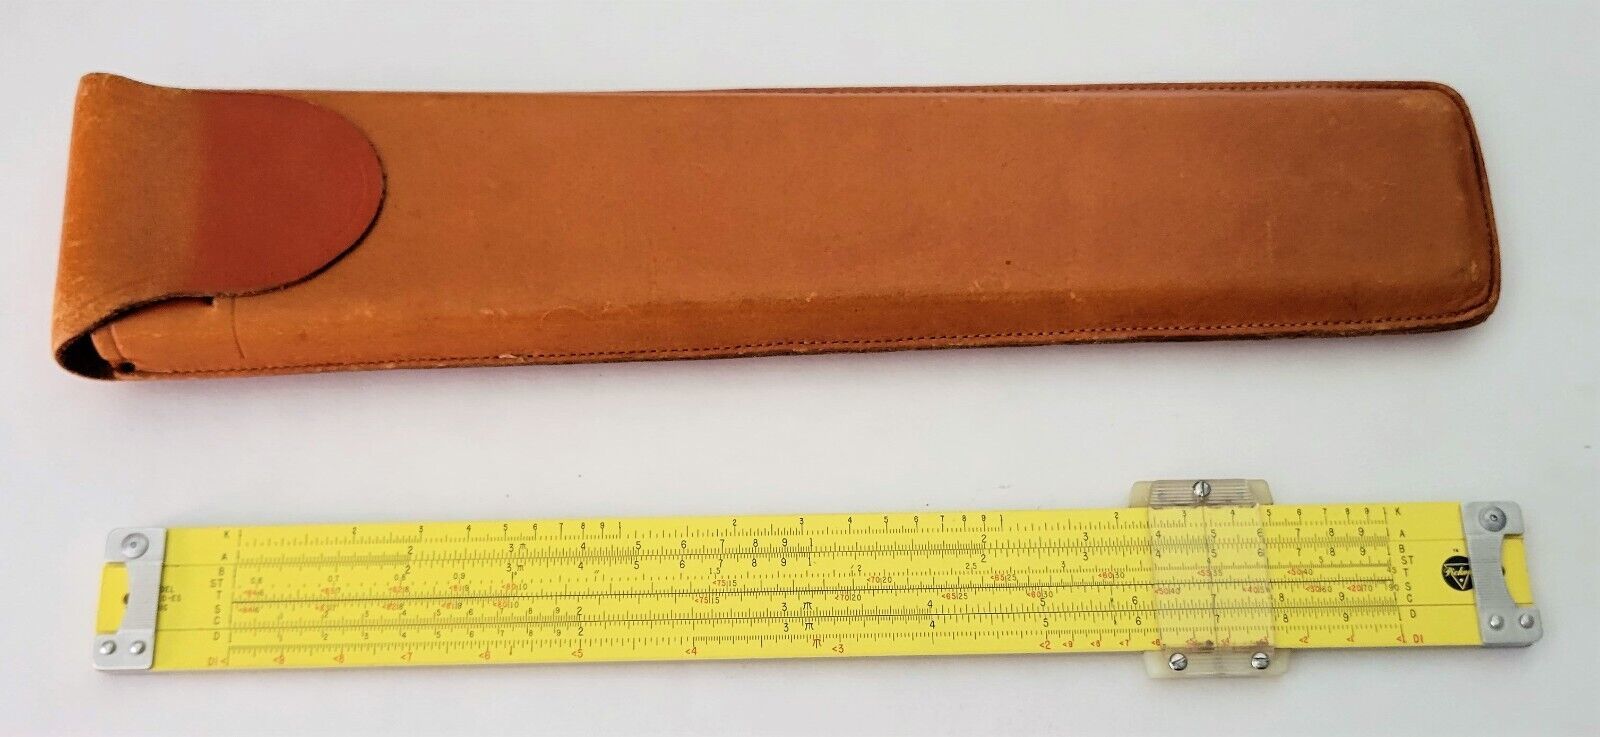 Primary image for Vintage Slide Rule - PICKETT - Model N1010-ES TRIG - With Leather Case - NICE